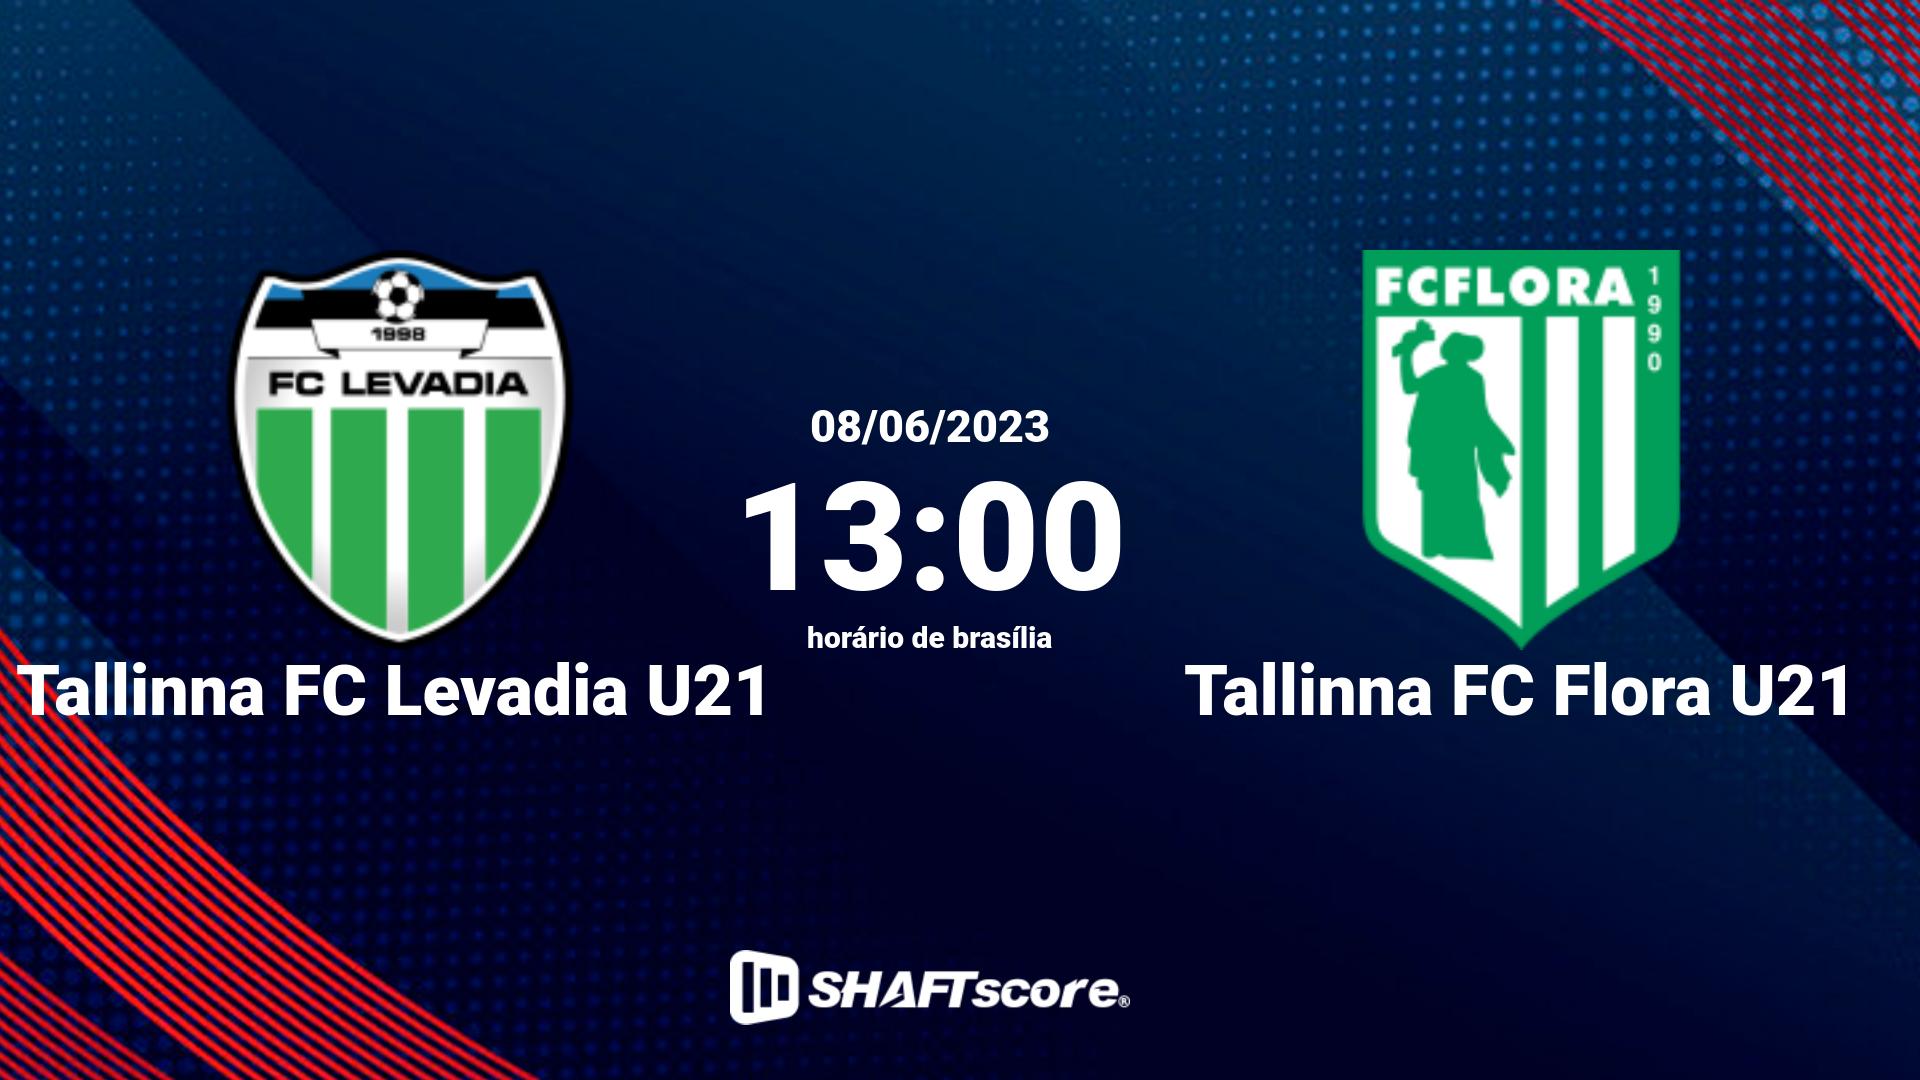 Estatísticas do jogo Tallinna FC Levadia U21 vs Tallinna FC Flora U21 08.06 13:00